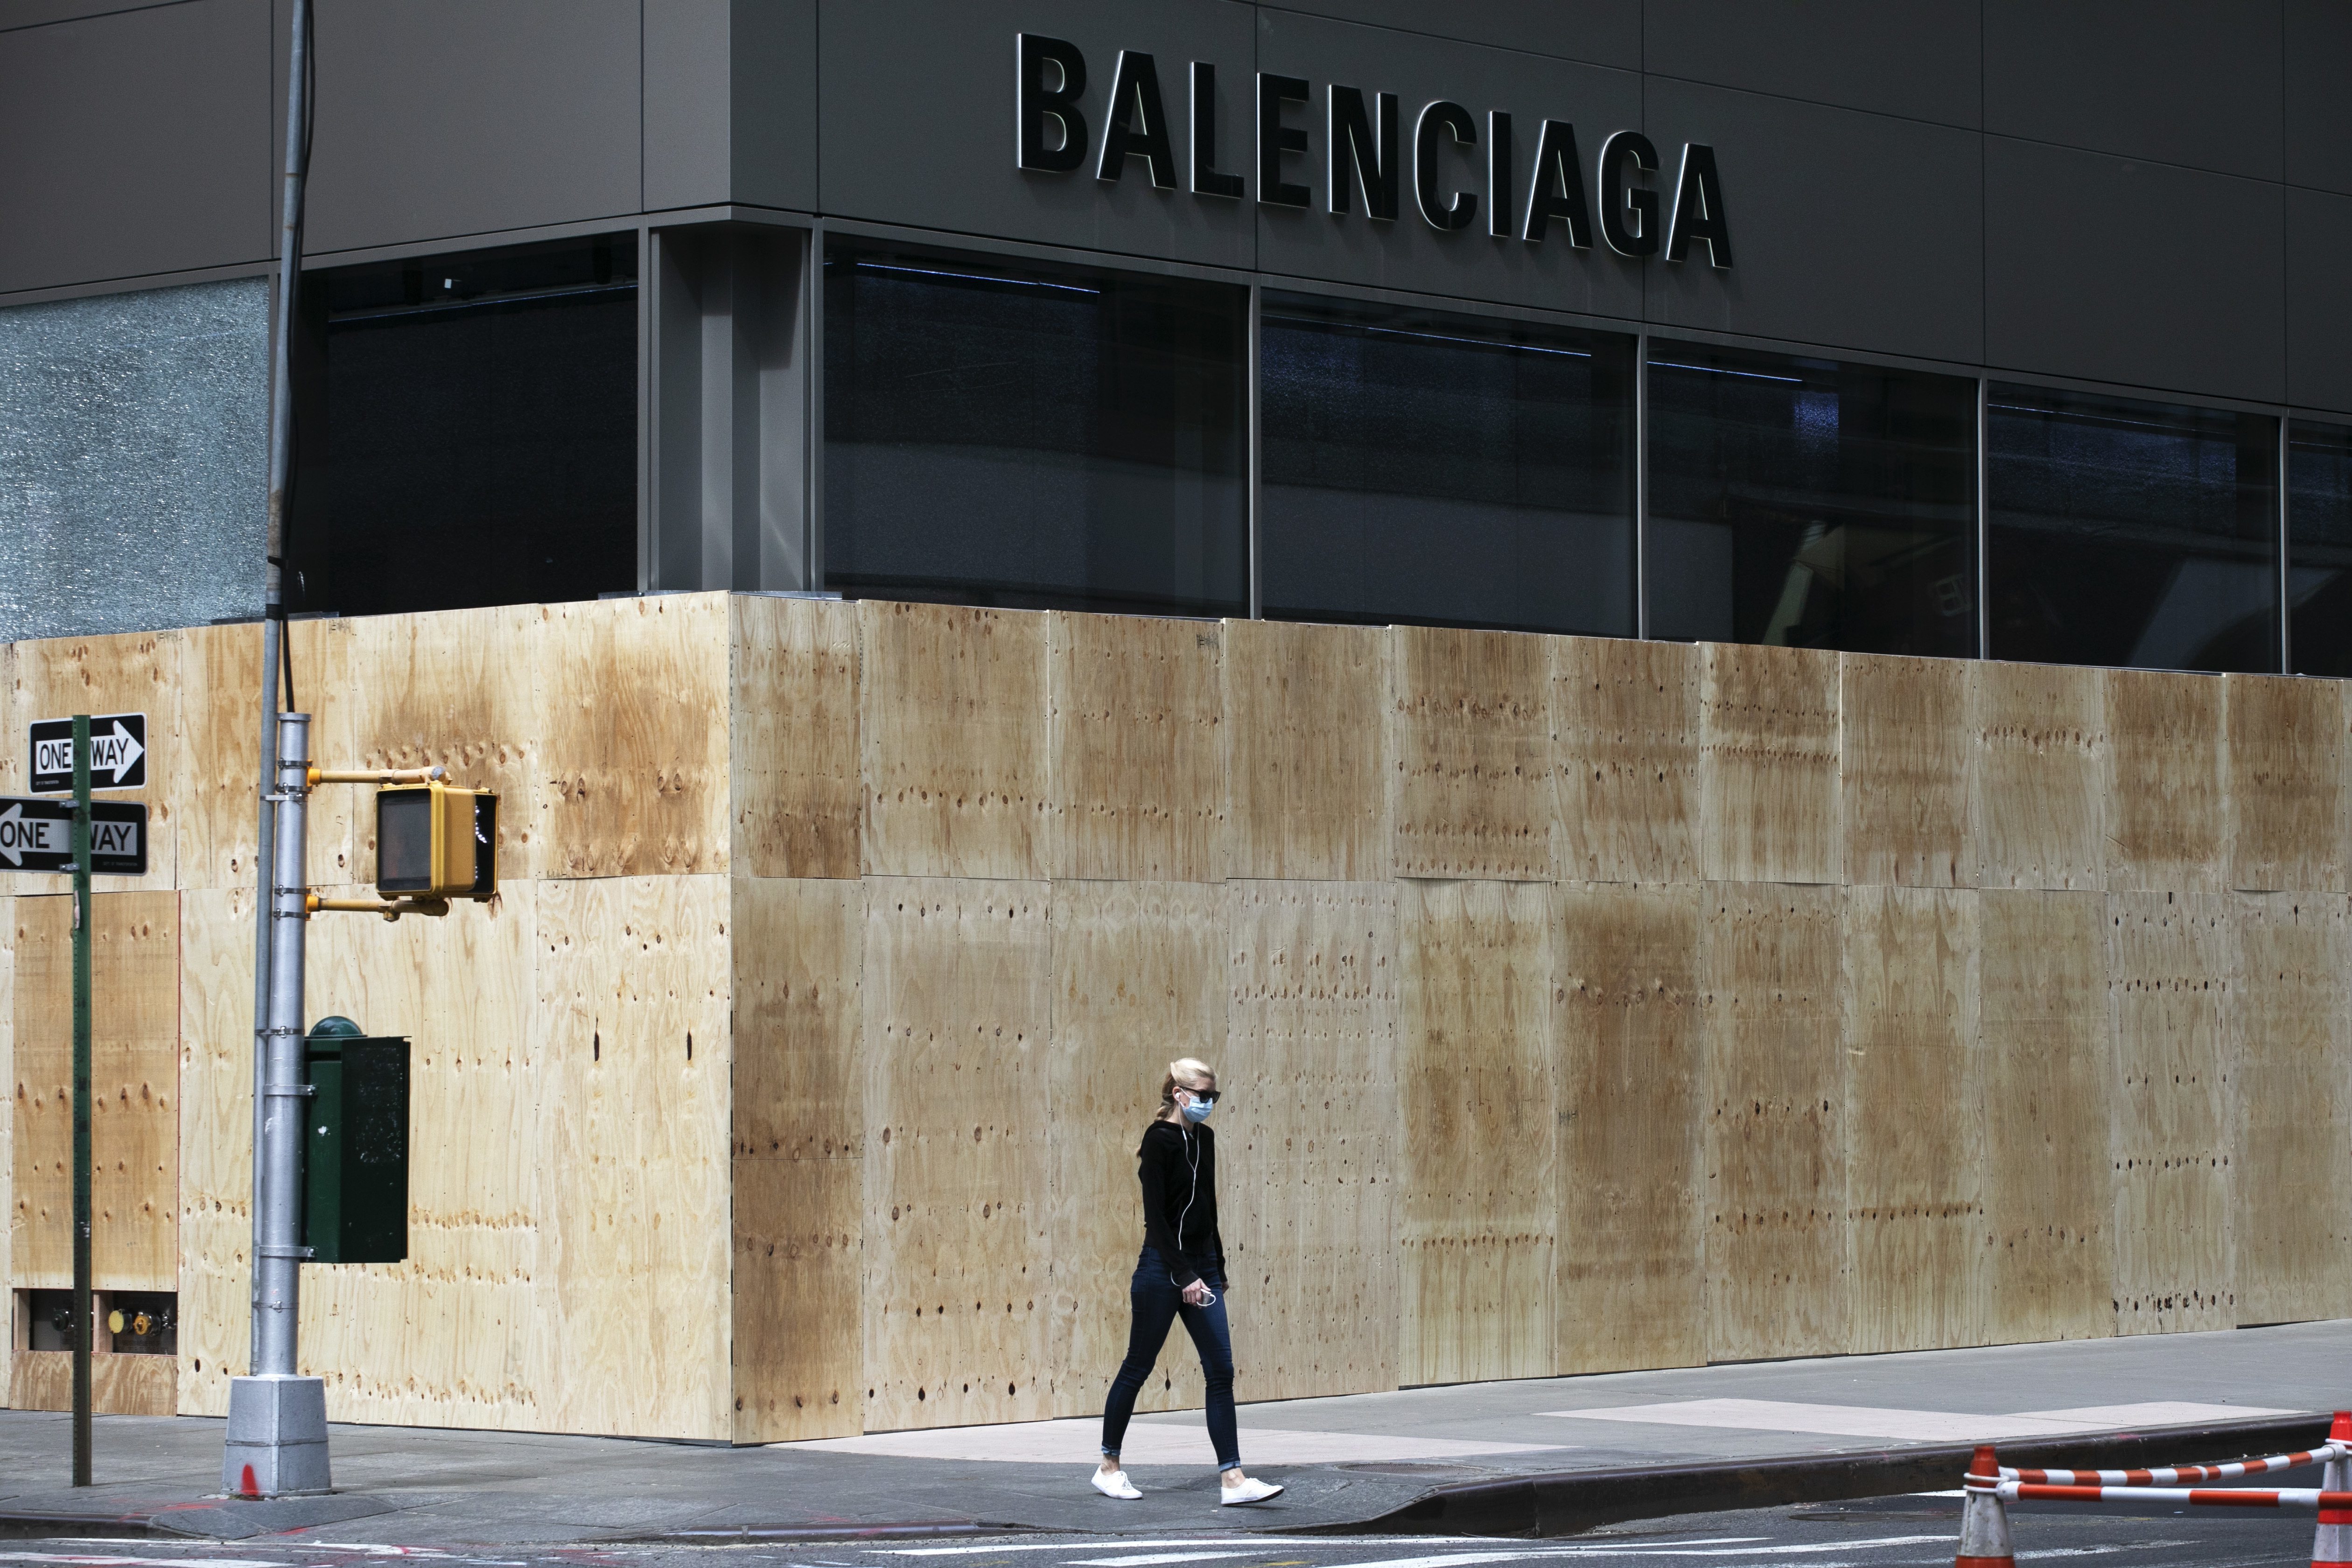 Balenciaga campaign star Nicole Kidman slammed for silence on ad scandal